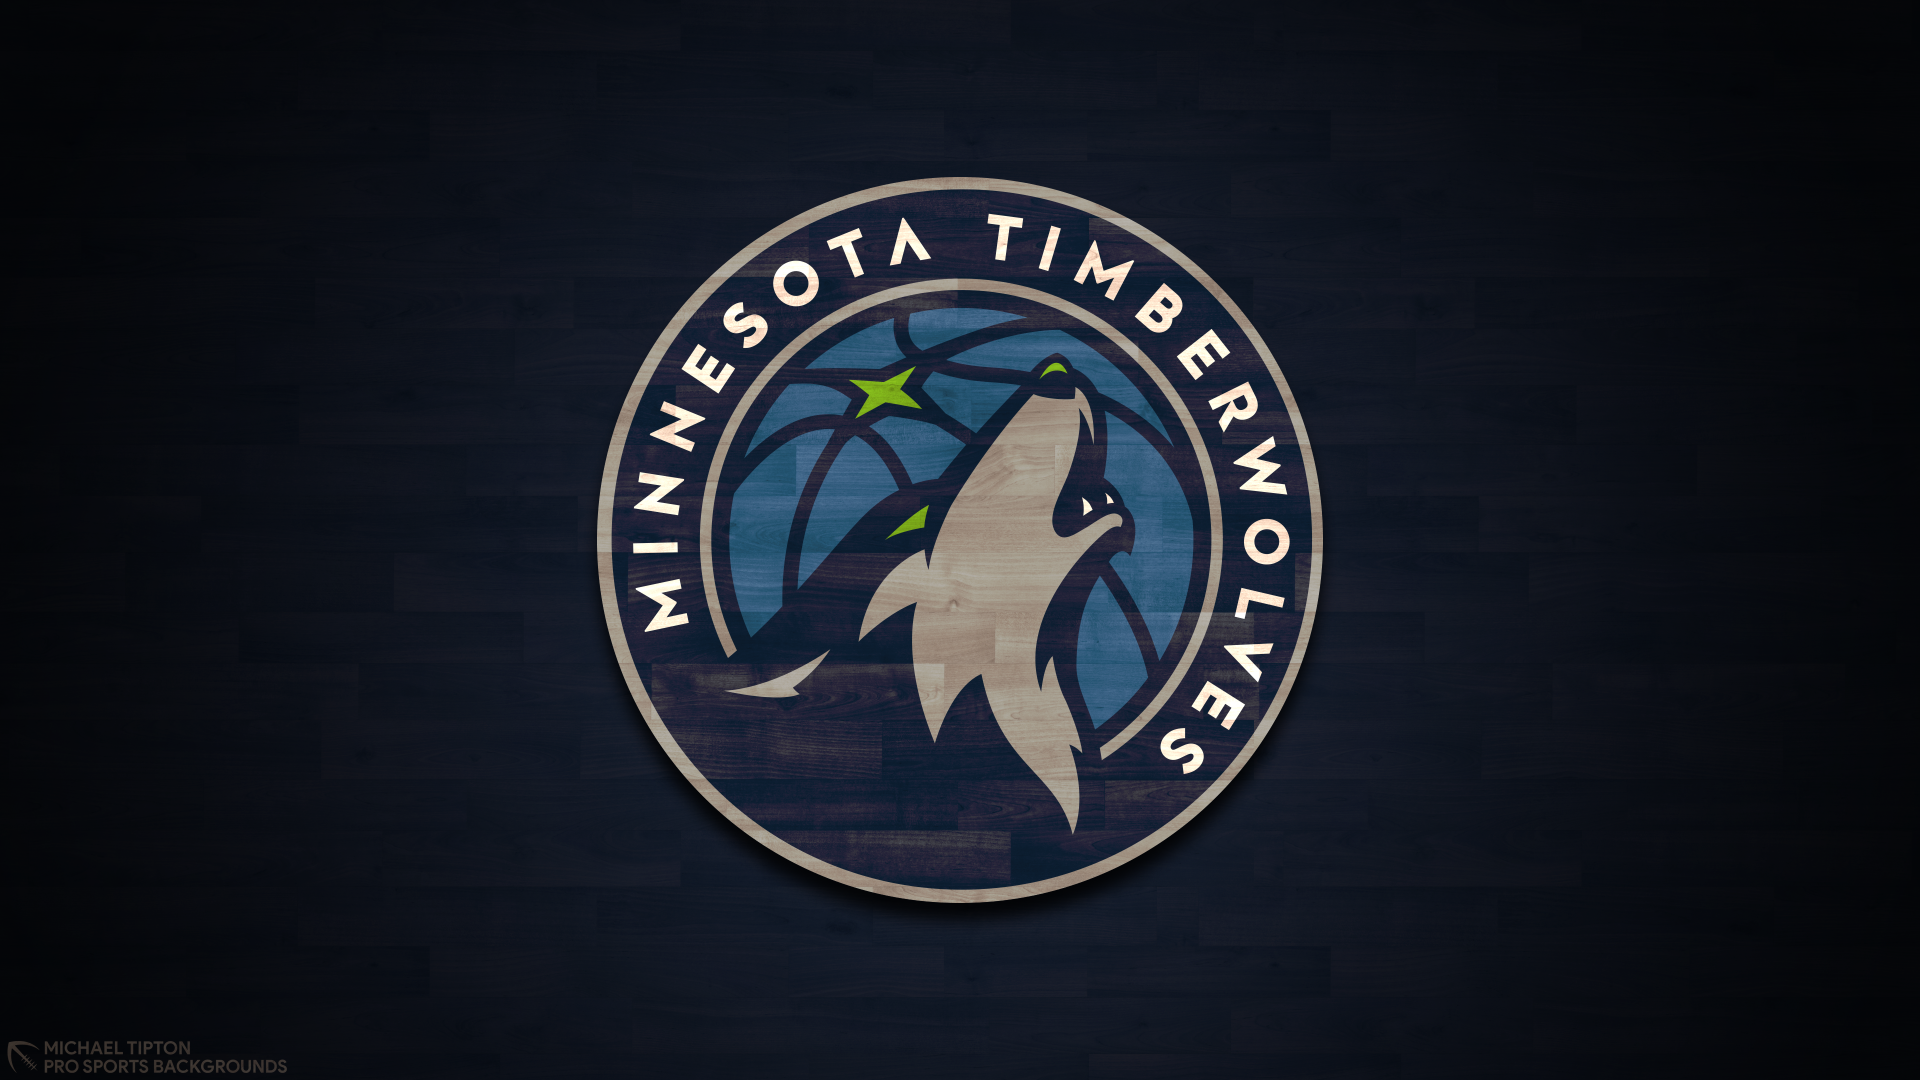 Sports Minnesota Timberwolves 4k Ultra HD Wallpaper by Michael Tipton